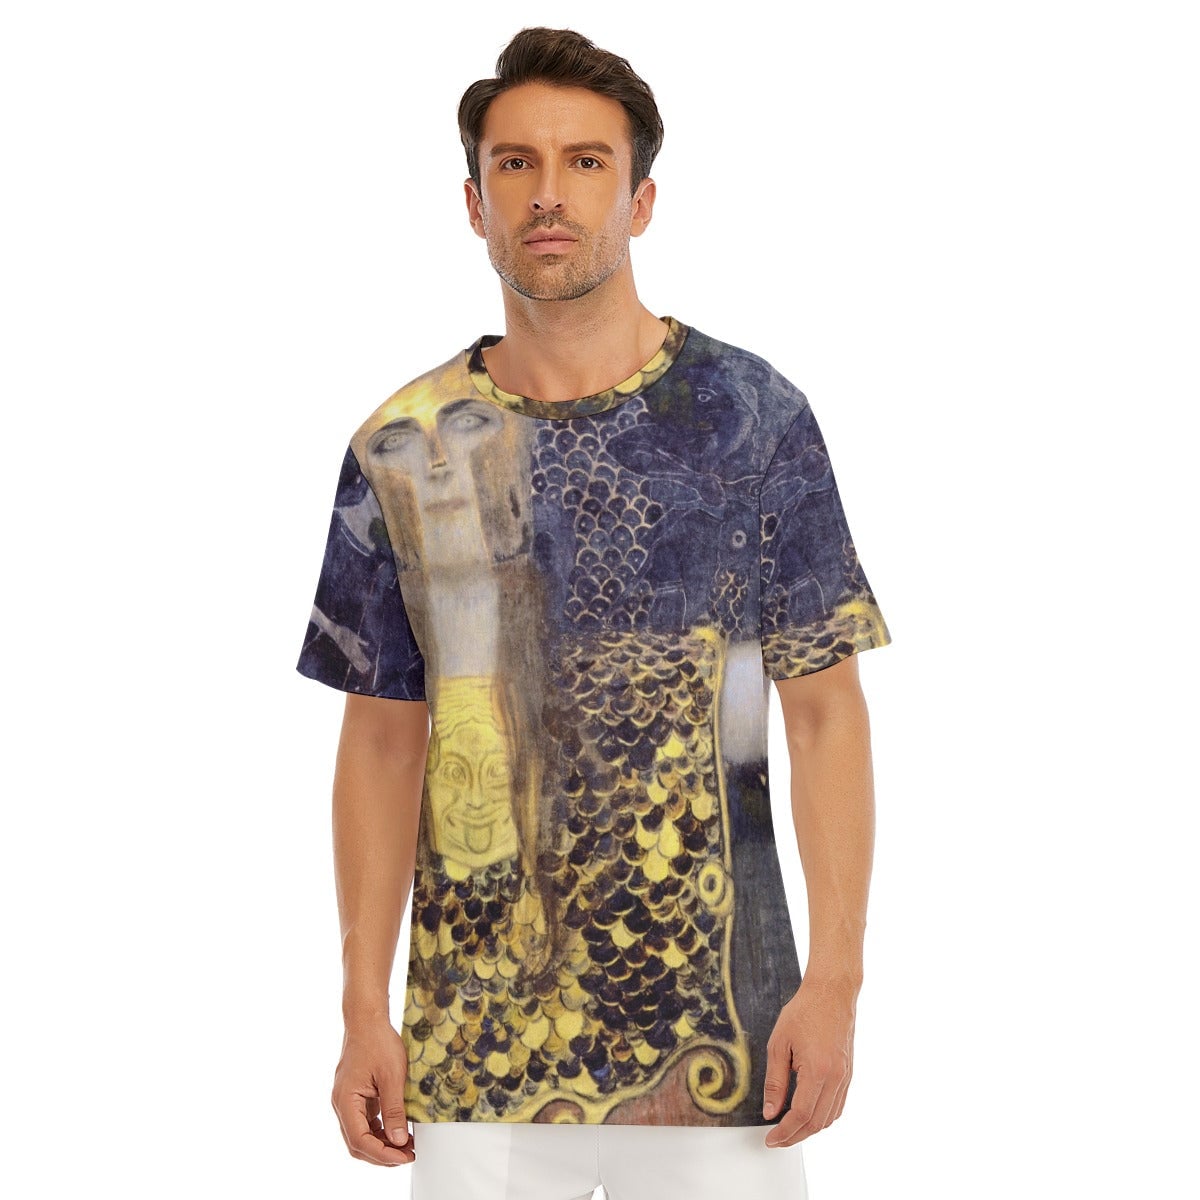 Pallas Athena Gustav Klimt T-Shirt - Famous Painting Art Tee